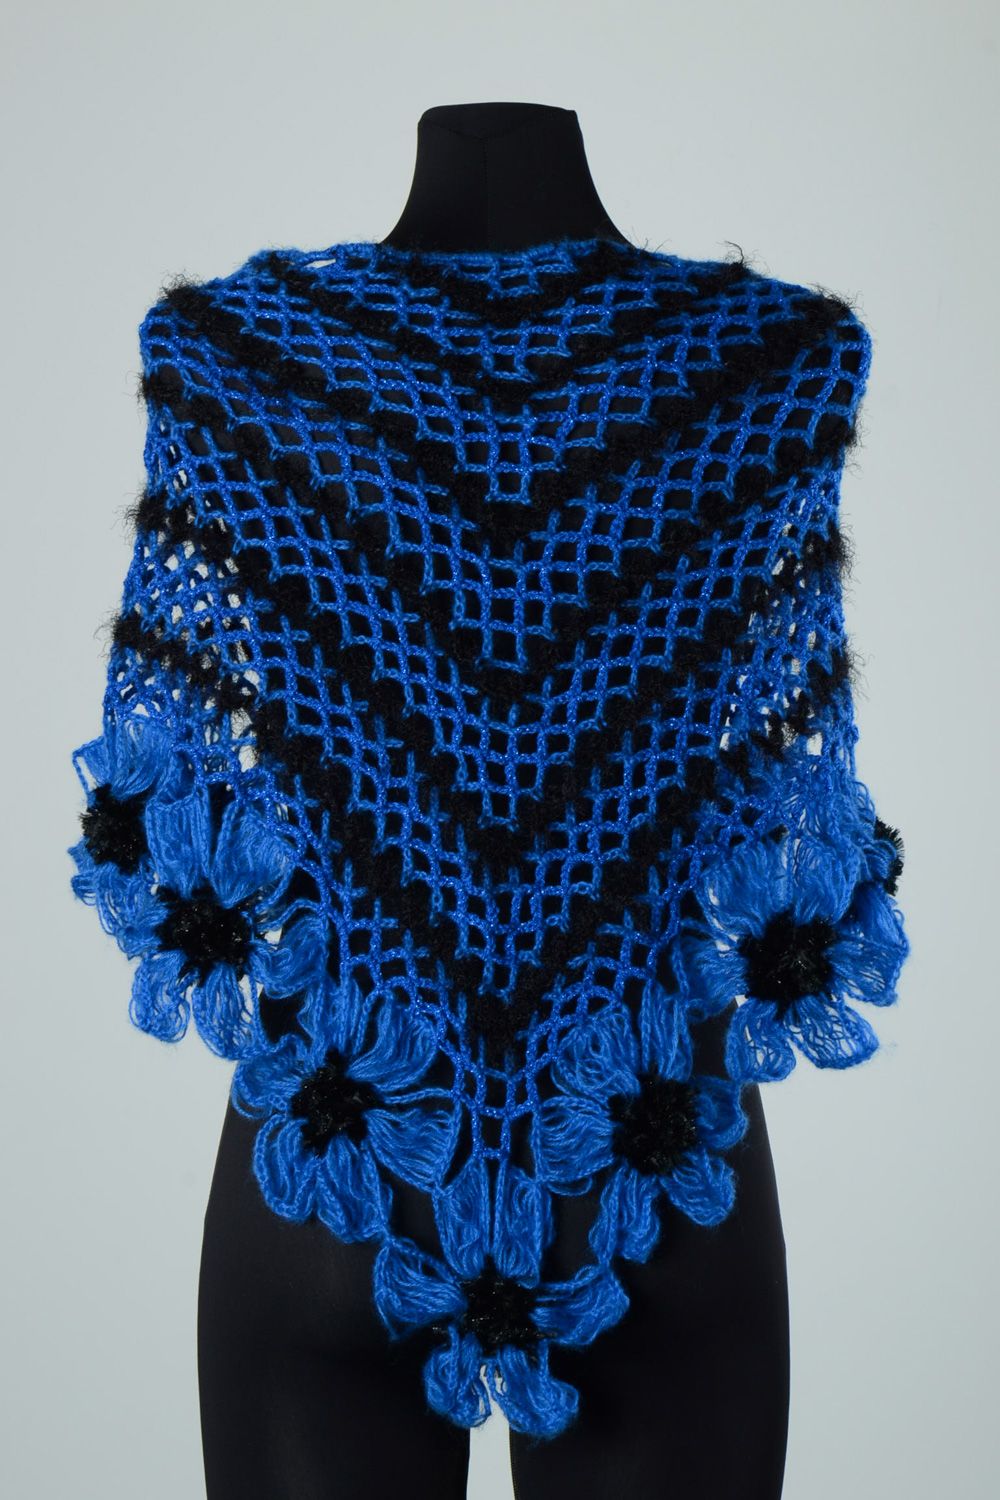 Black and blue handmade crochet women's shawl photo 2